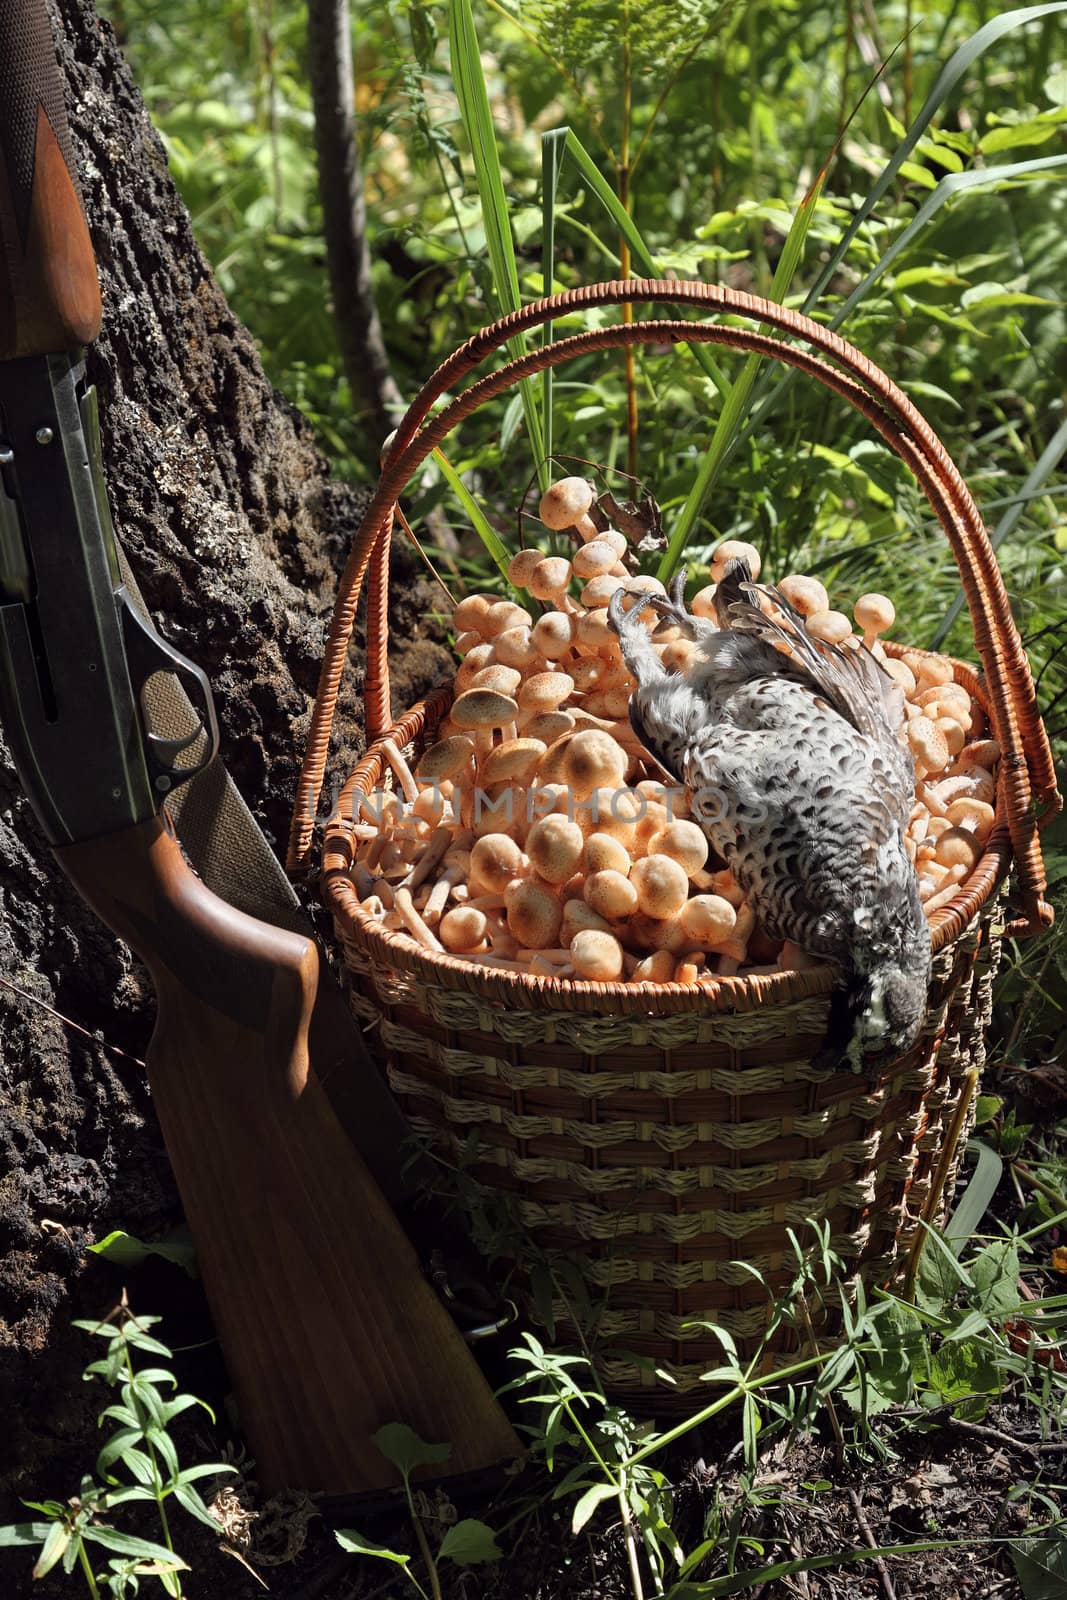 Gun, hazel grouse and a basket of mushrooms
